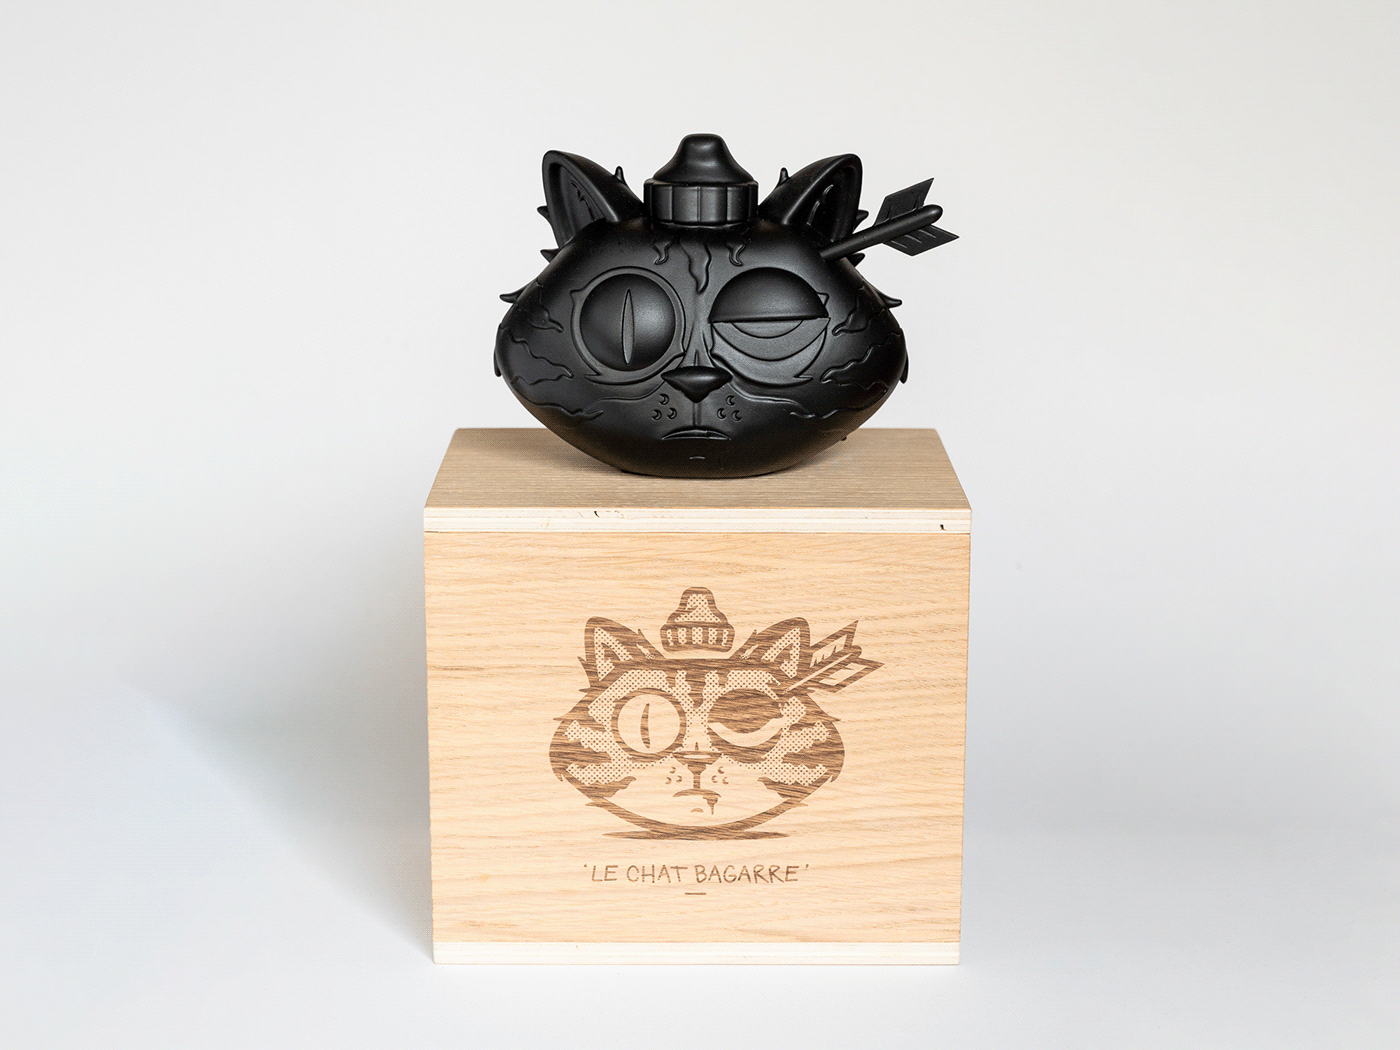 resin sculpture toy Cat black Character design  ekiem